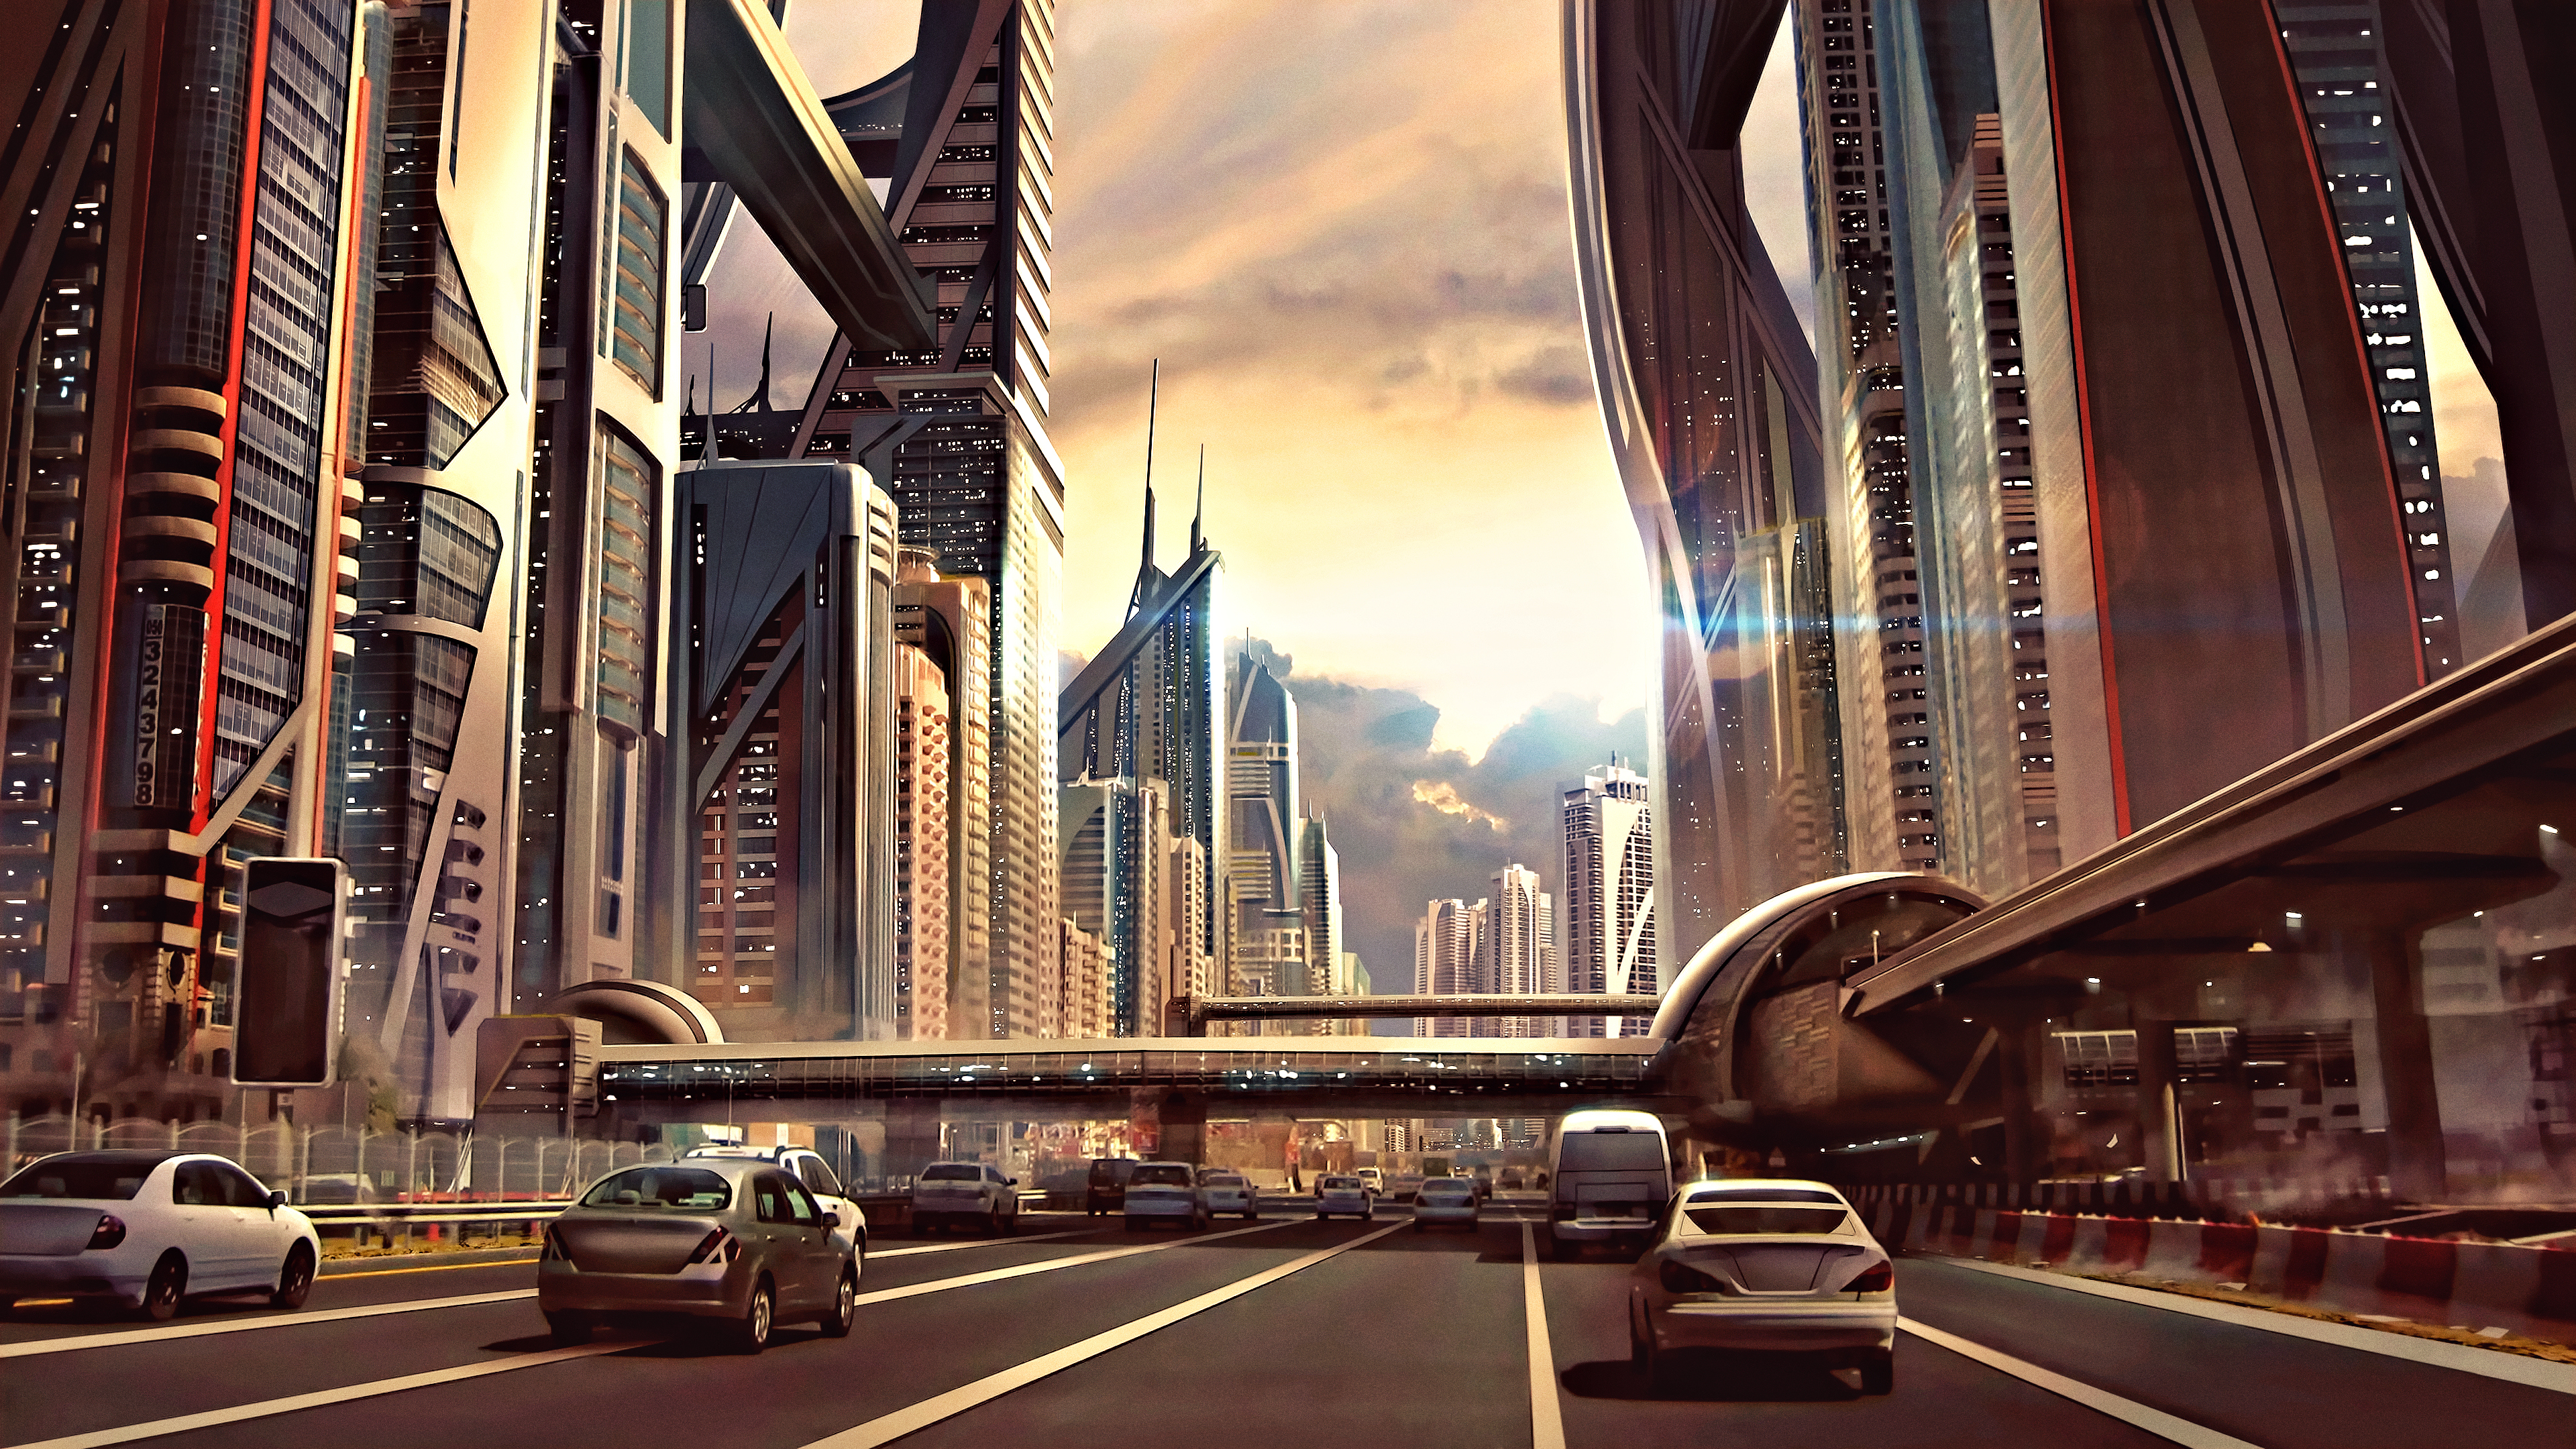 General 3840x2160 futuristic city futuristic science fiction digital art concept art artwork fan art CGI cyberpunk cyber city cityscape urban car traffic road